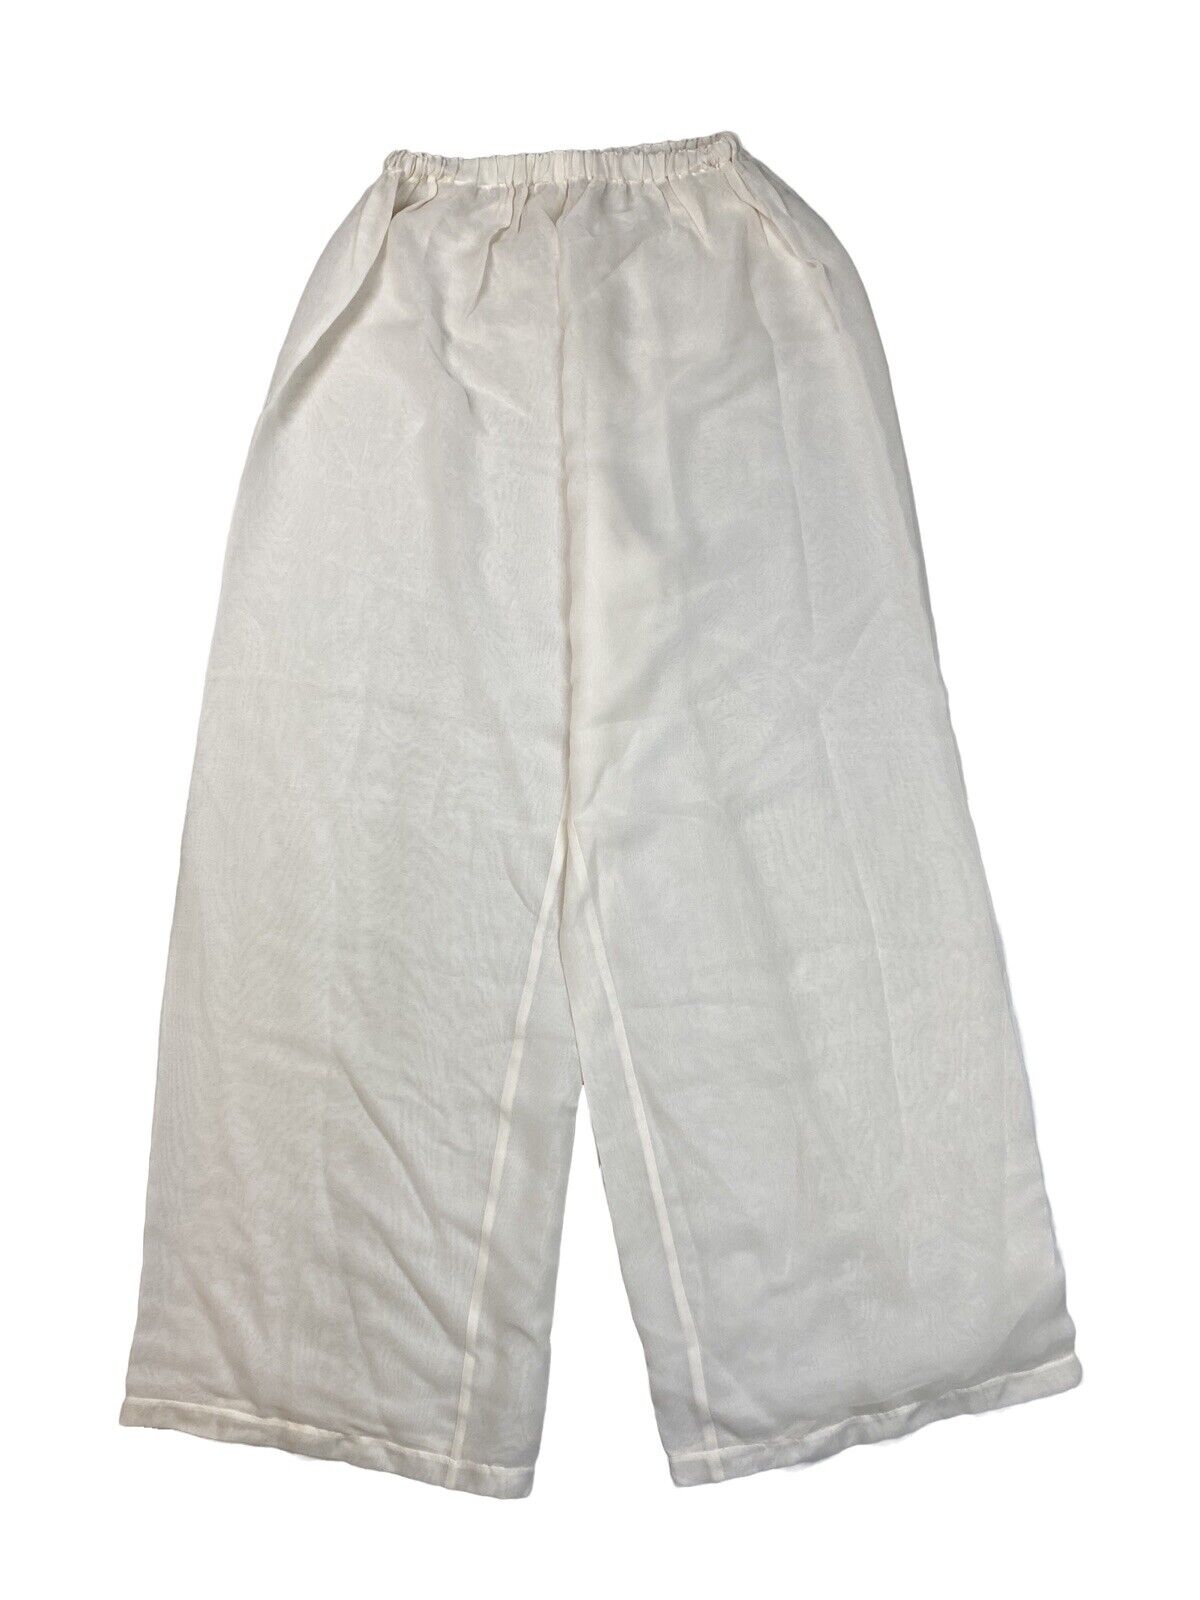 Fred Hayman Women's White 100% Silk Sheer Loose Fit Pants - L